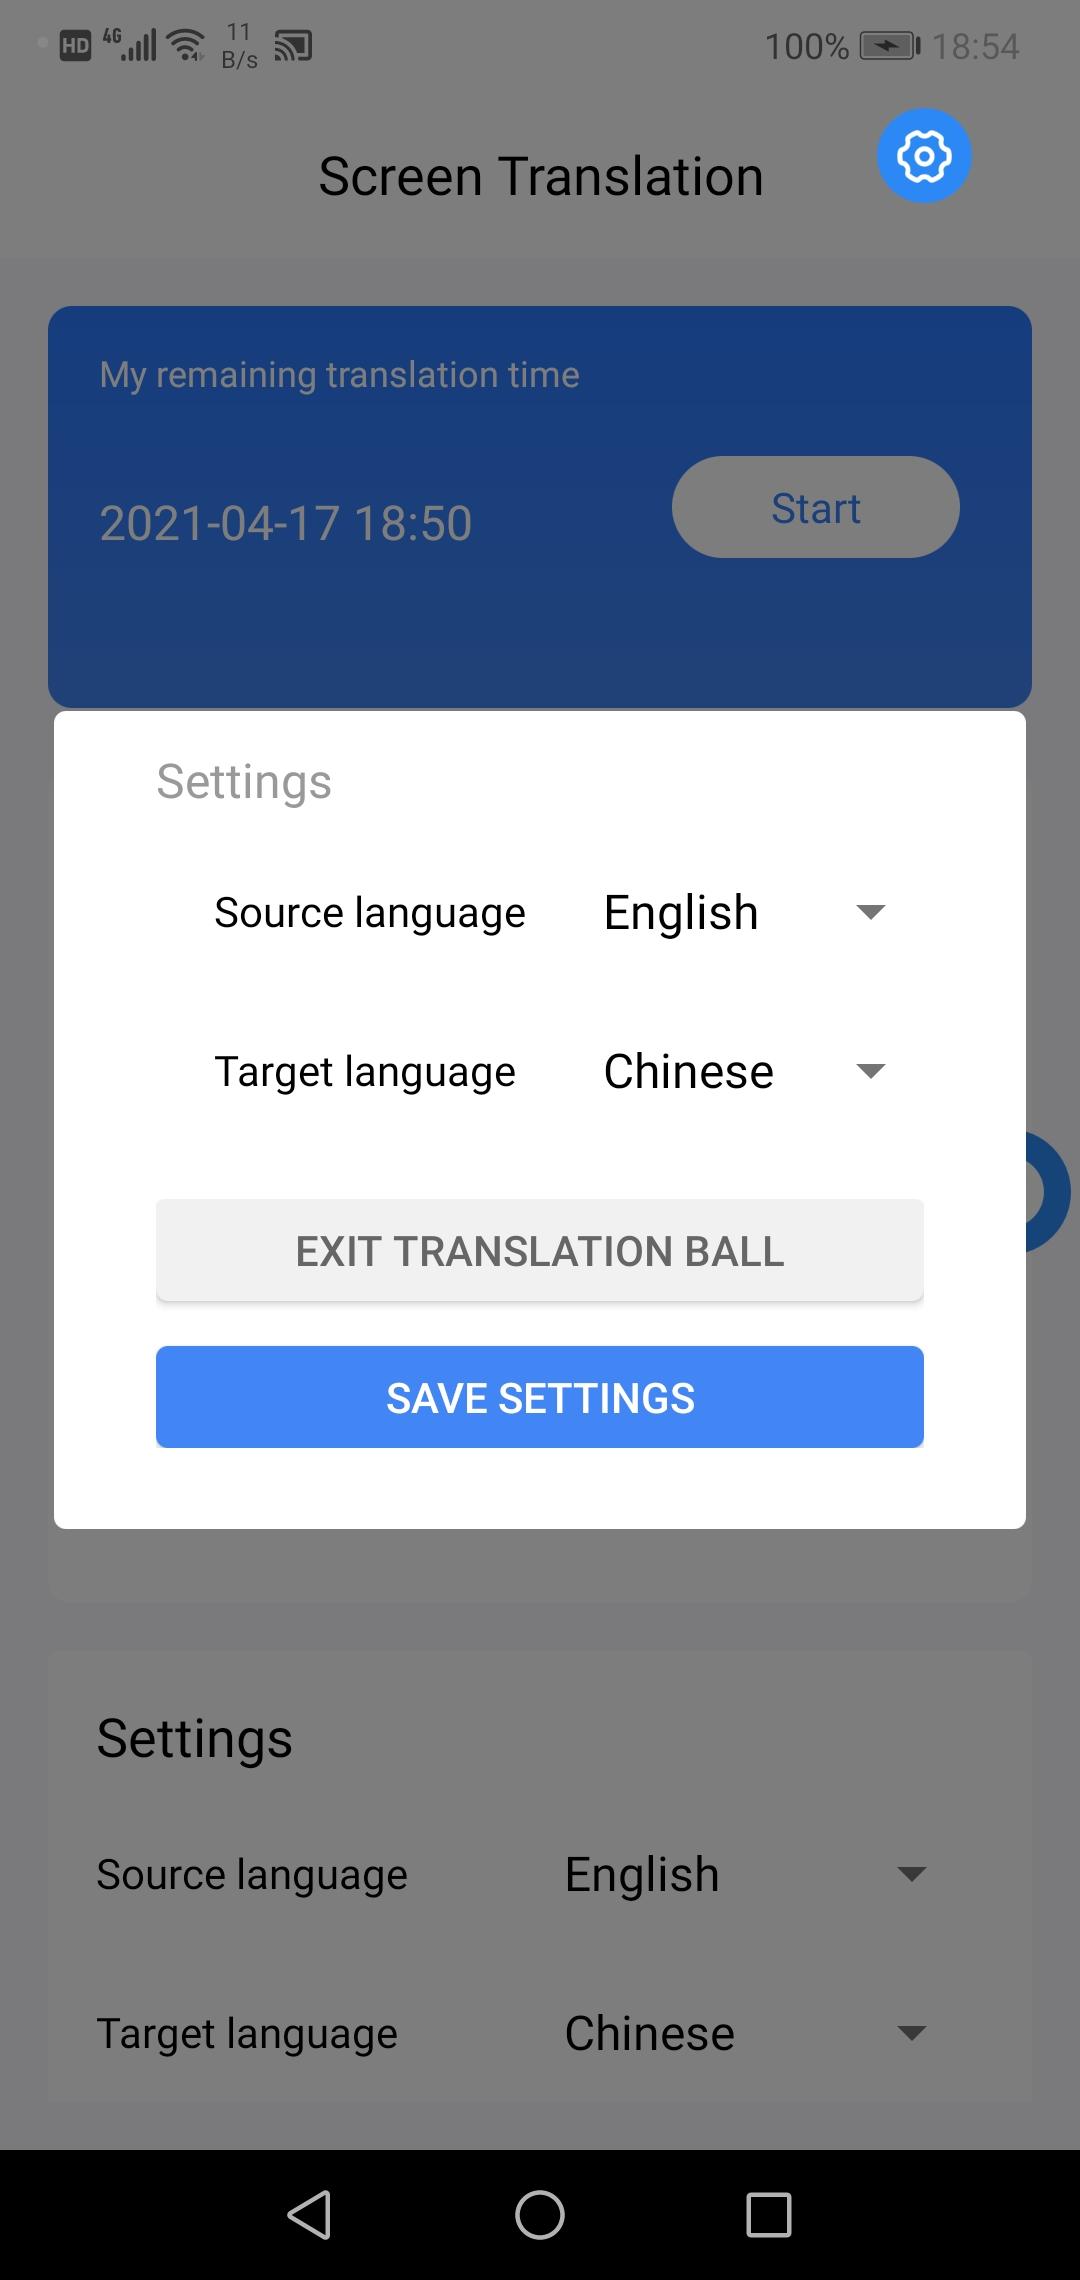 Перевод с экрана андроид. Перевод с экрана. Screen Translate. Screen Translator Android. Переводчик с экрана андроид.